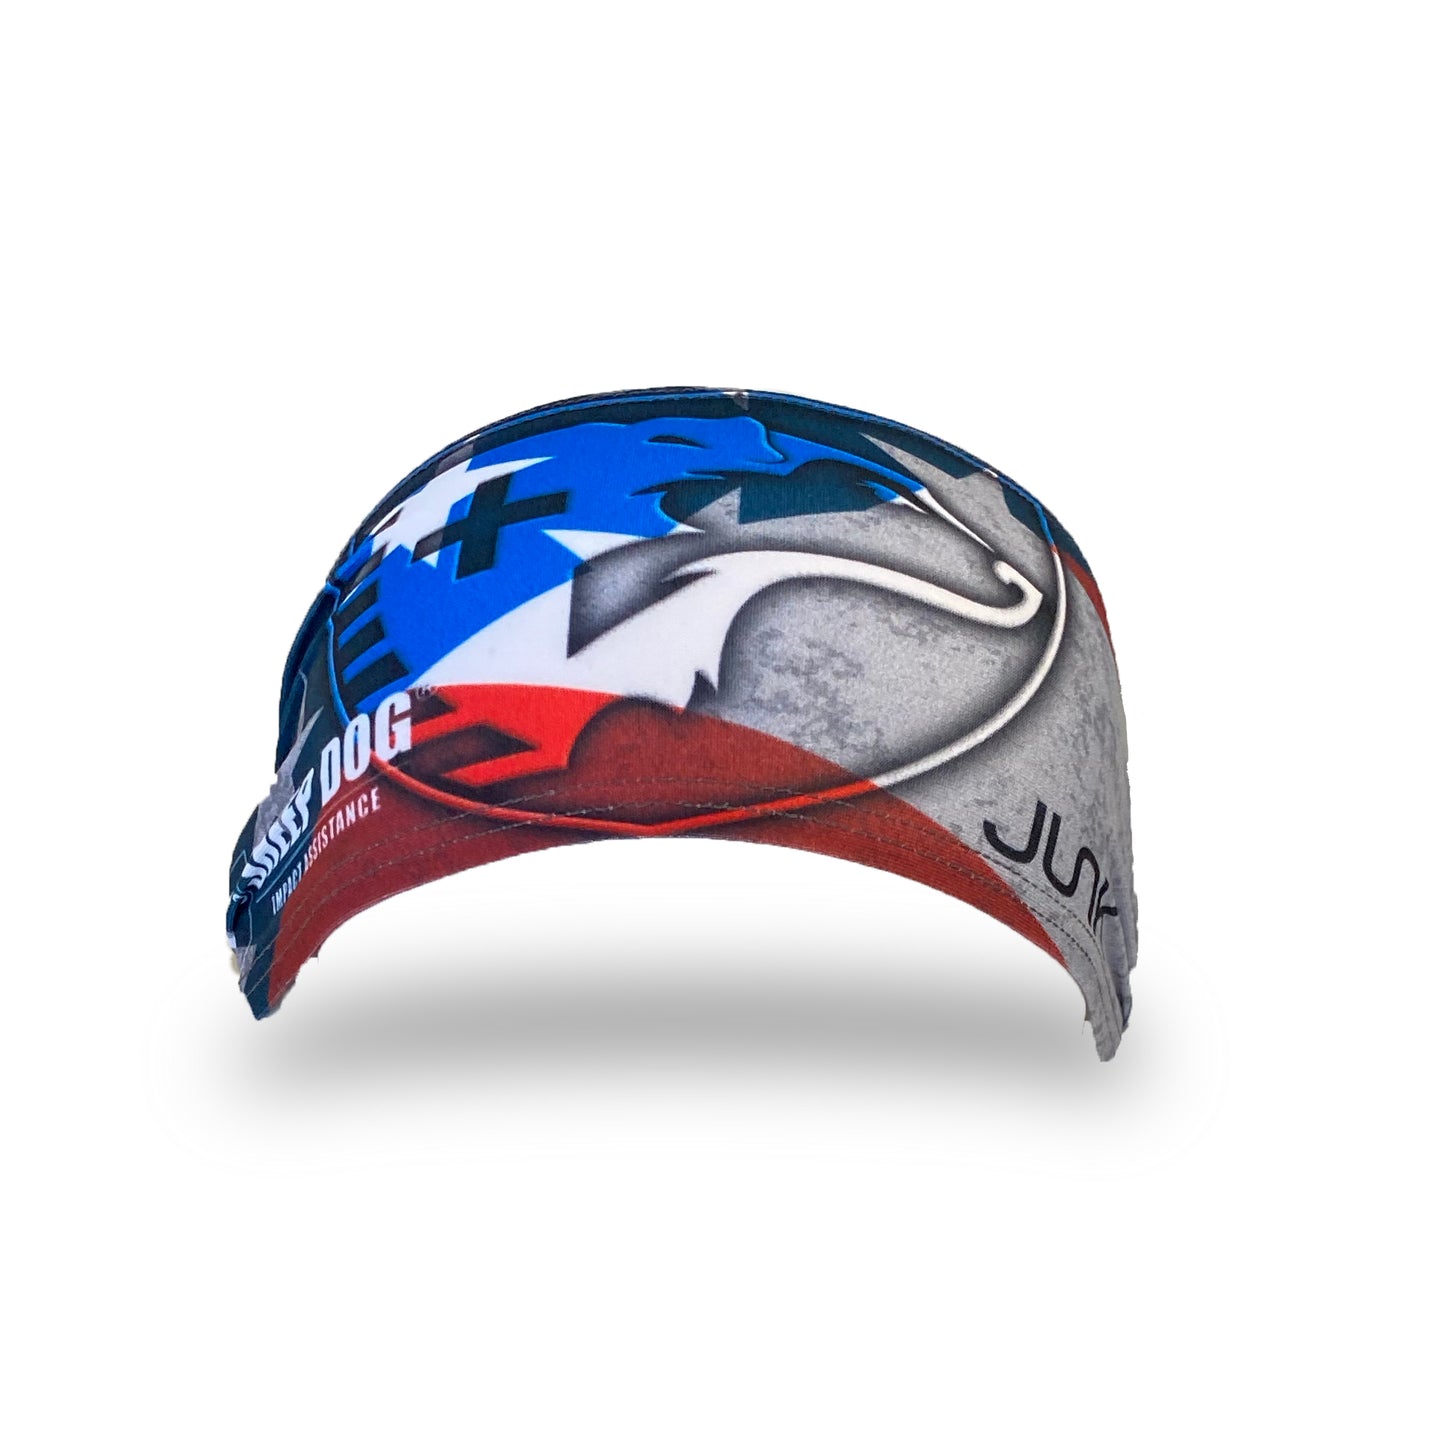 SDIA "American Flag" Junk Headband